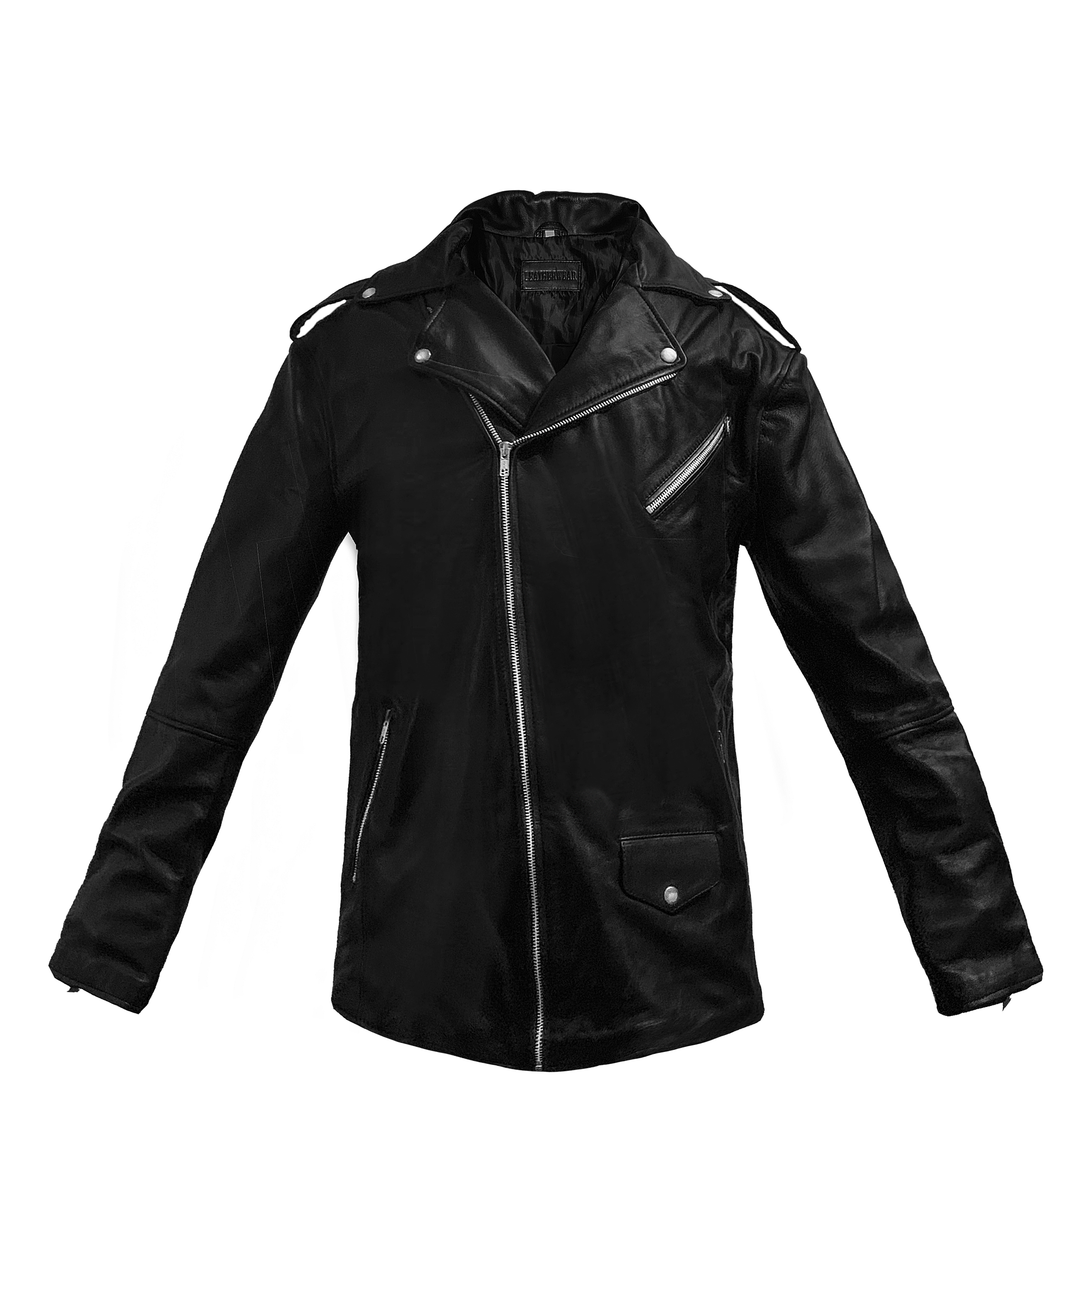 Men’s Black Leather Coat 